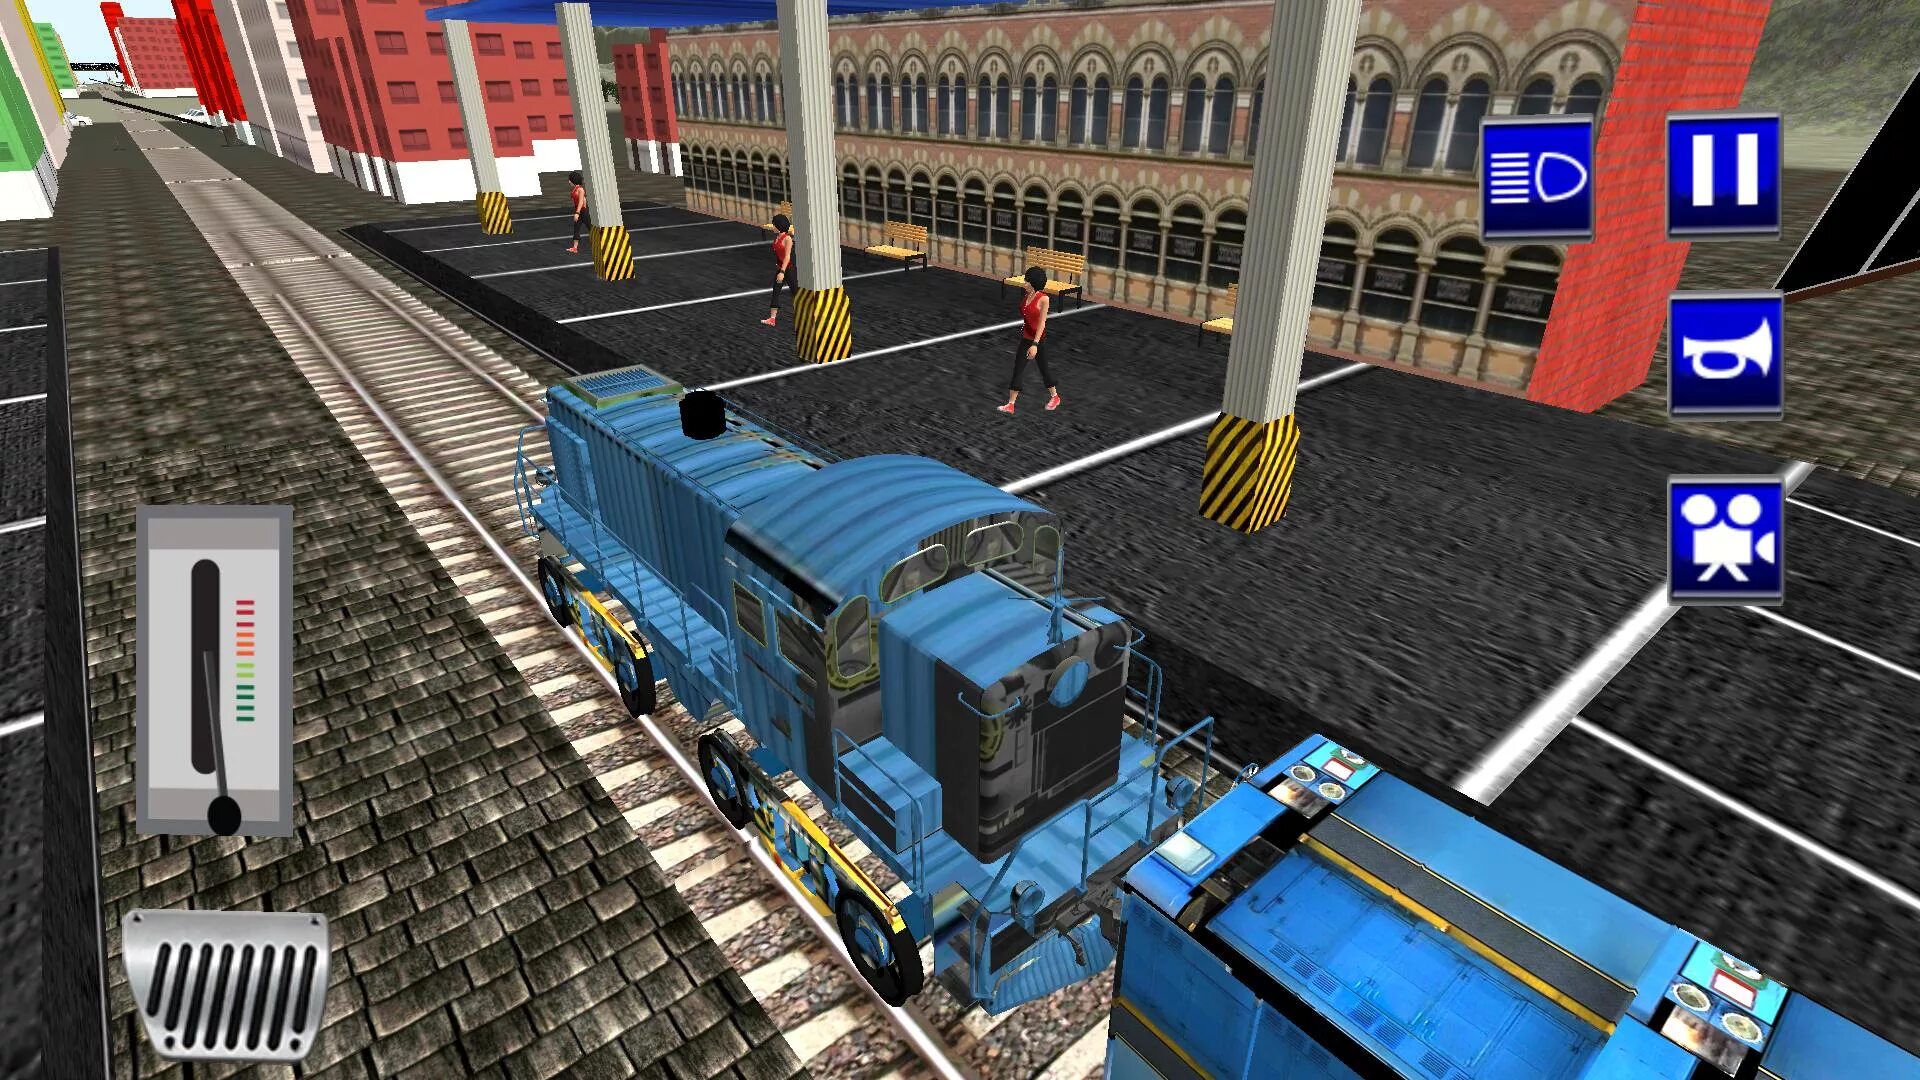 Train game simulator. Игра поезд РЖД симулятор. Симулятор грузового поезда. Симулятор поездов электрички. Симулятор крушения поезда.